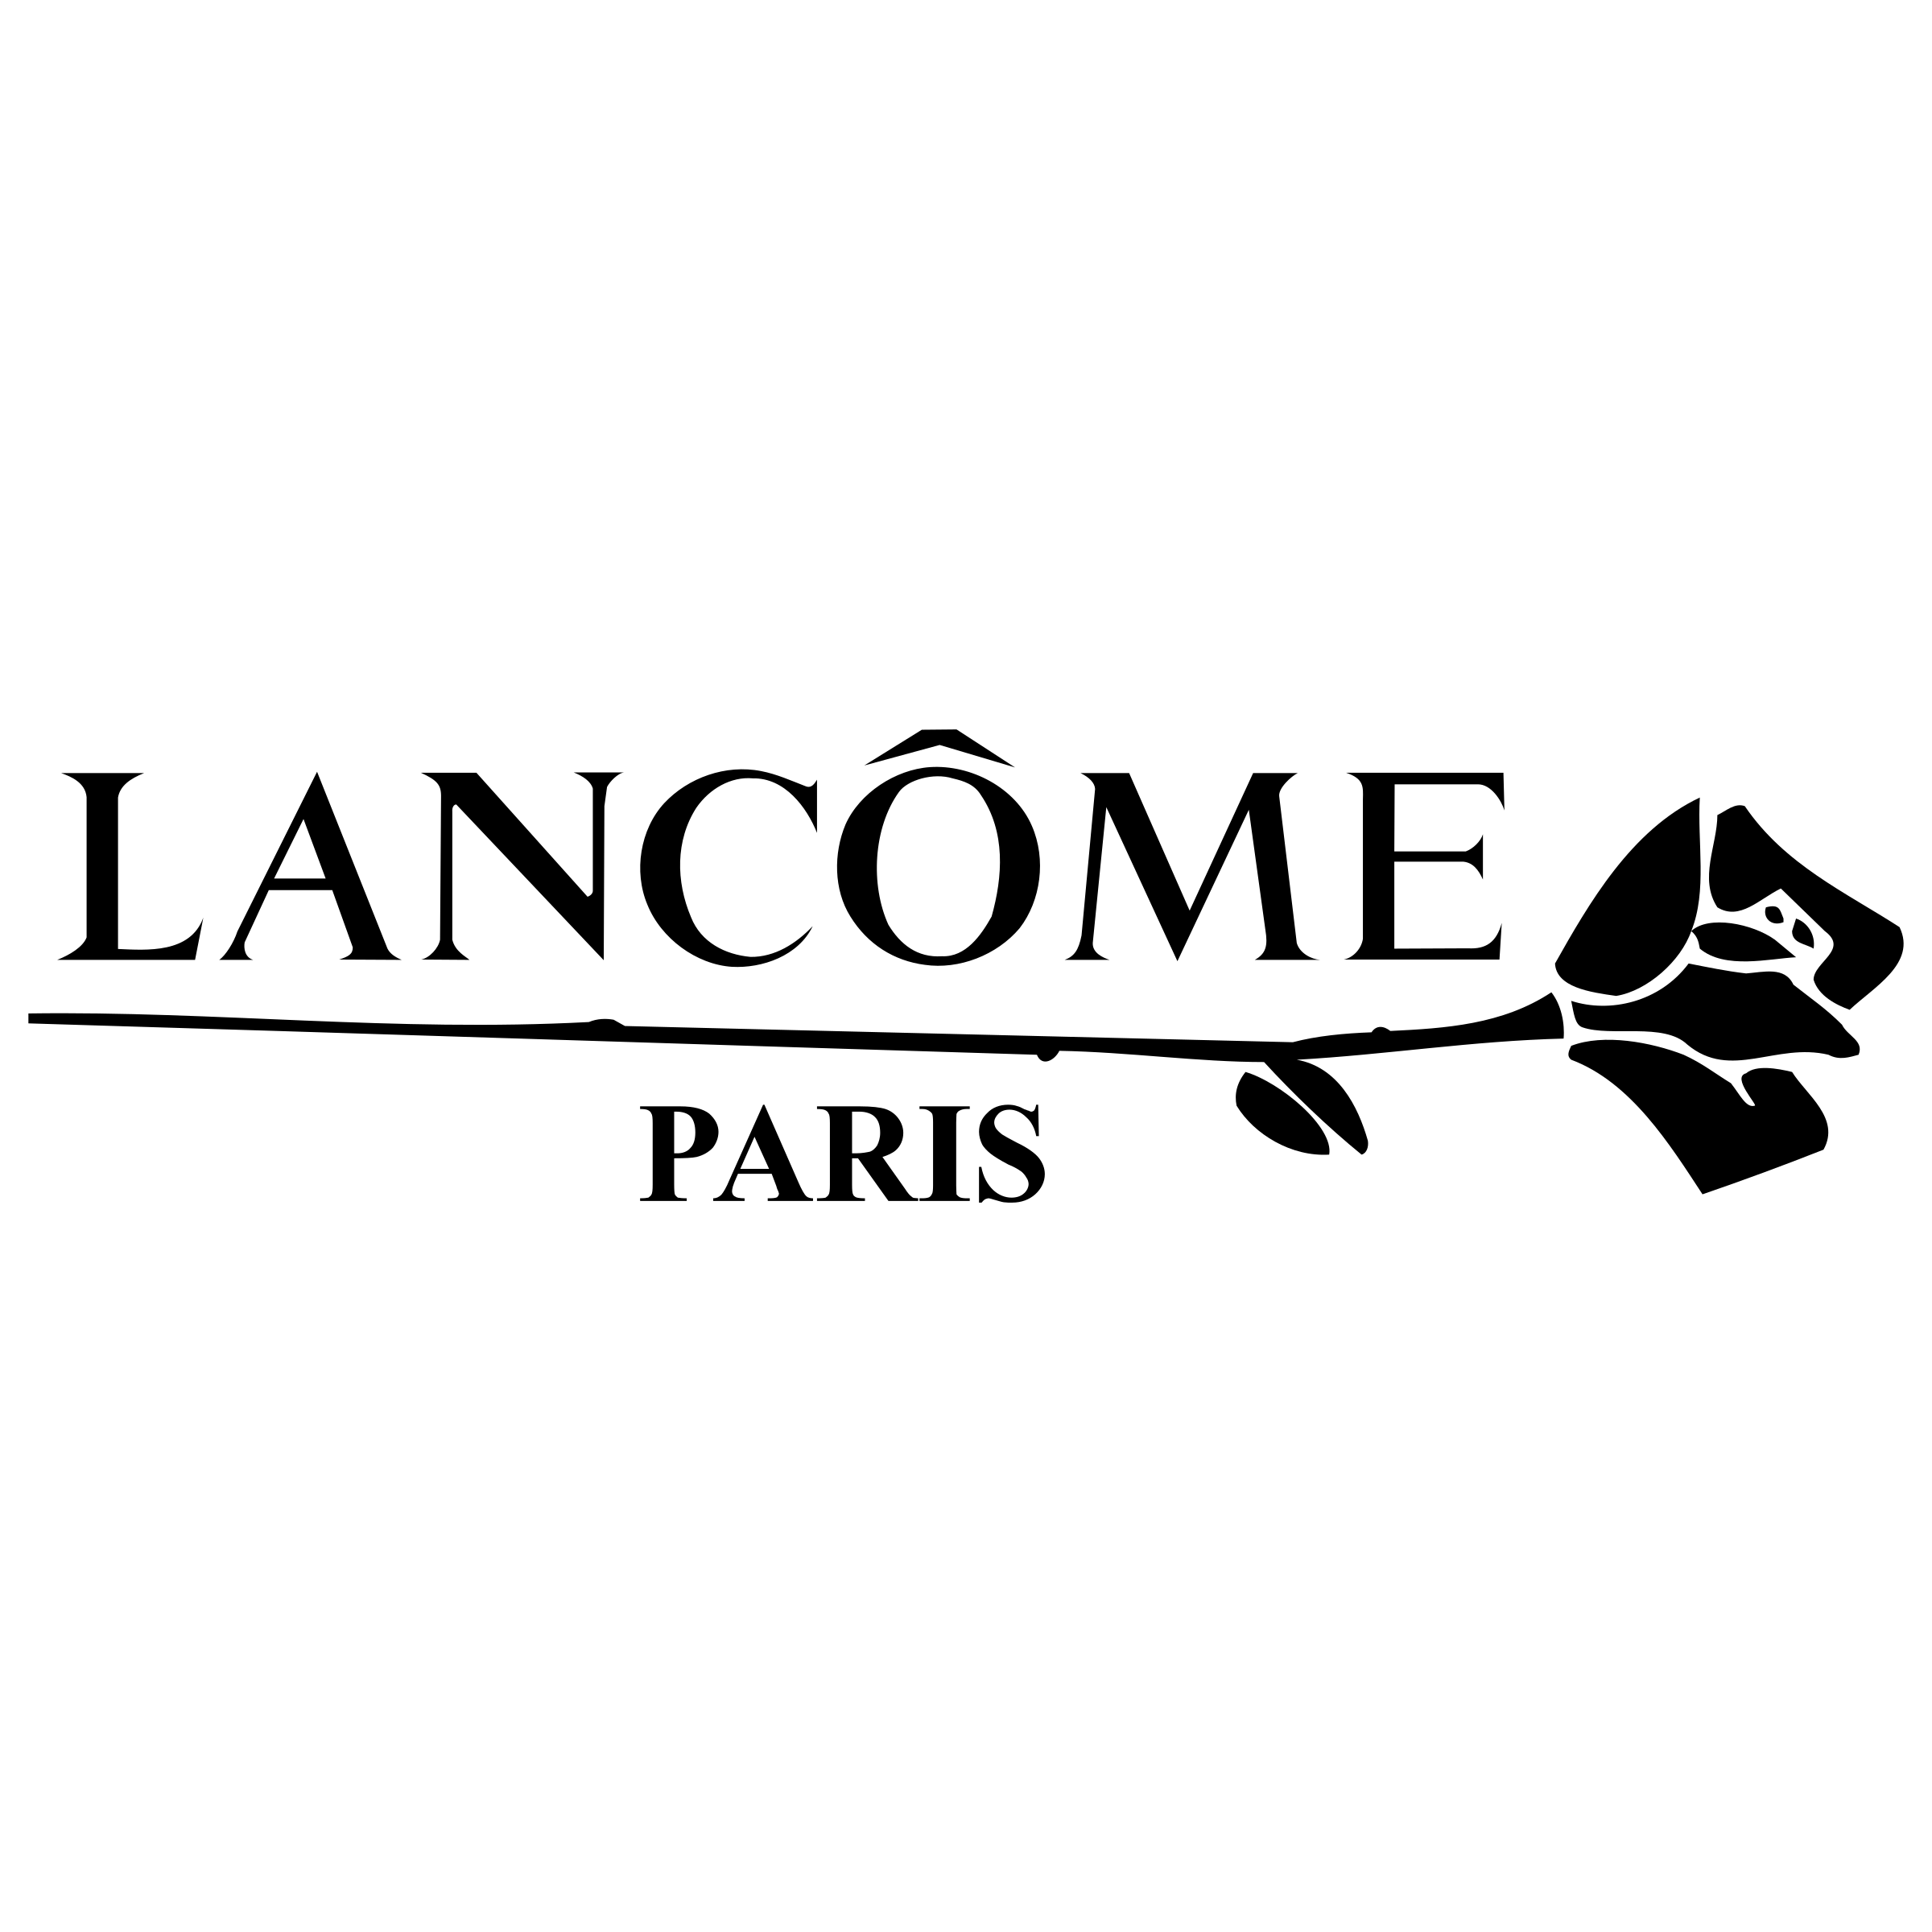 Lancome Logo - Lancome Logo PNG Transparent & SVG Vector - Freebie Supply